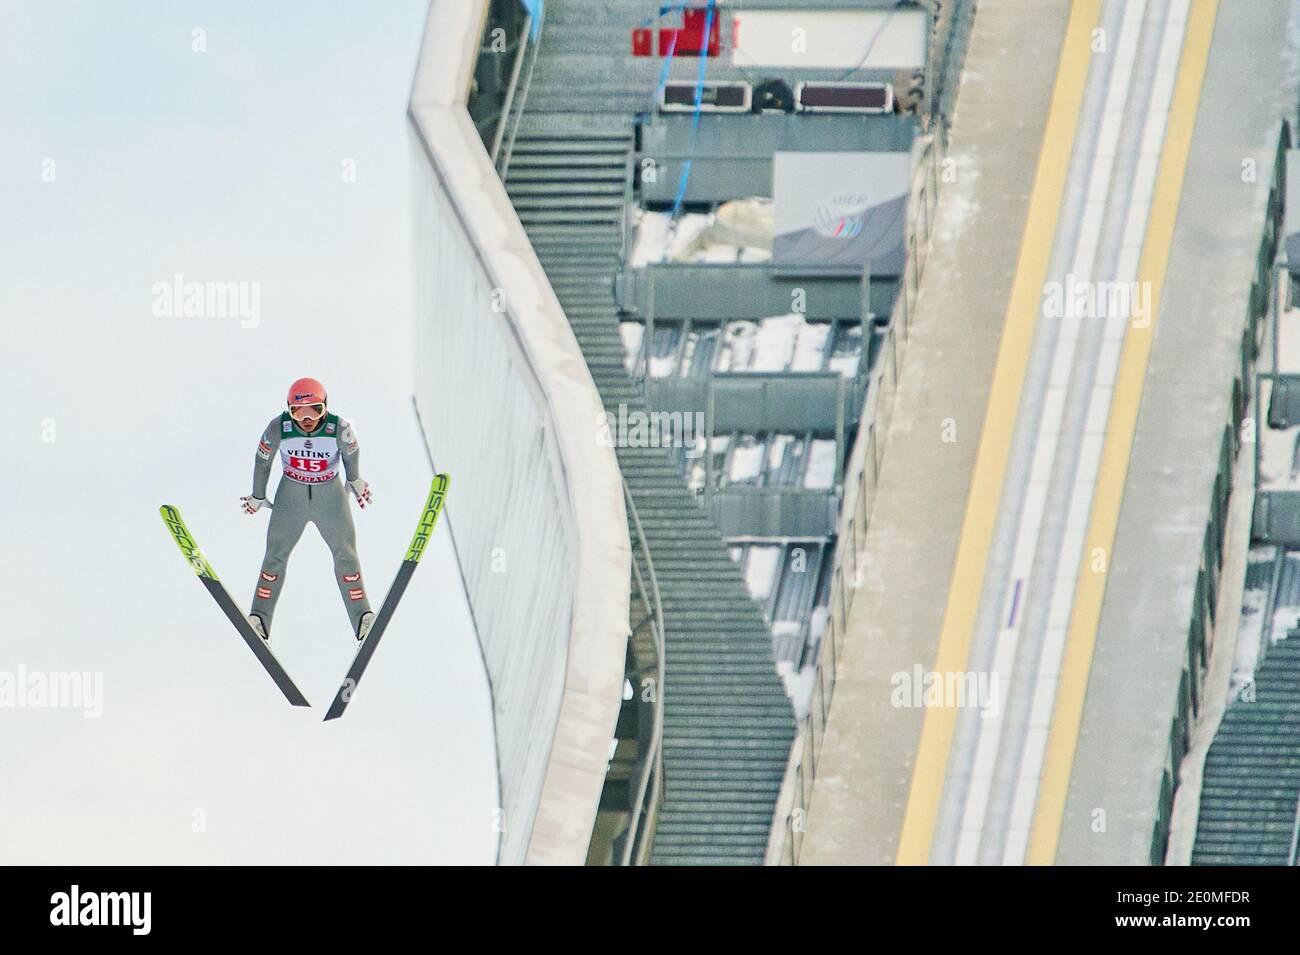 Daniel HUBER, AUT  in action at the Four Hills Tournament Ski Jumping at Olympic Stadium, Grosse Olympiaschanze in Garmisch-Partenkirchen, Bavaria, Germany, January 01, 2021.  © Peter Schatz / Alamy Live News Stock Photo